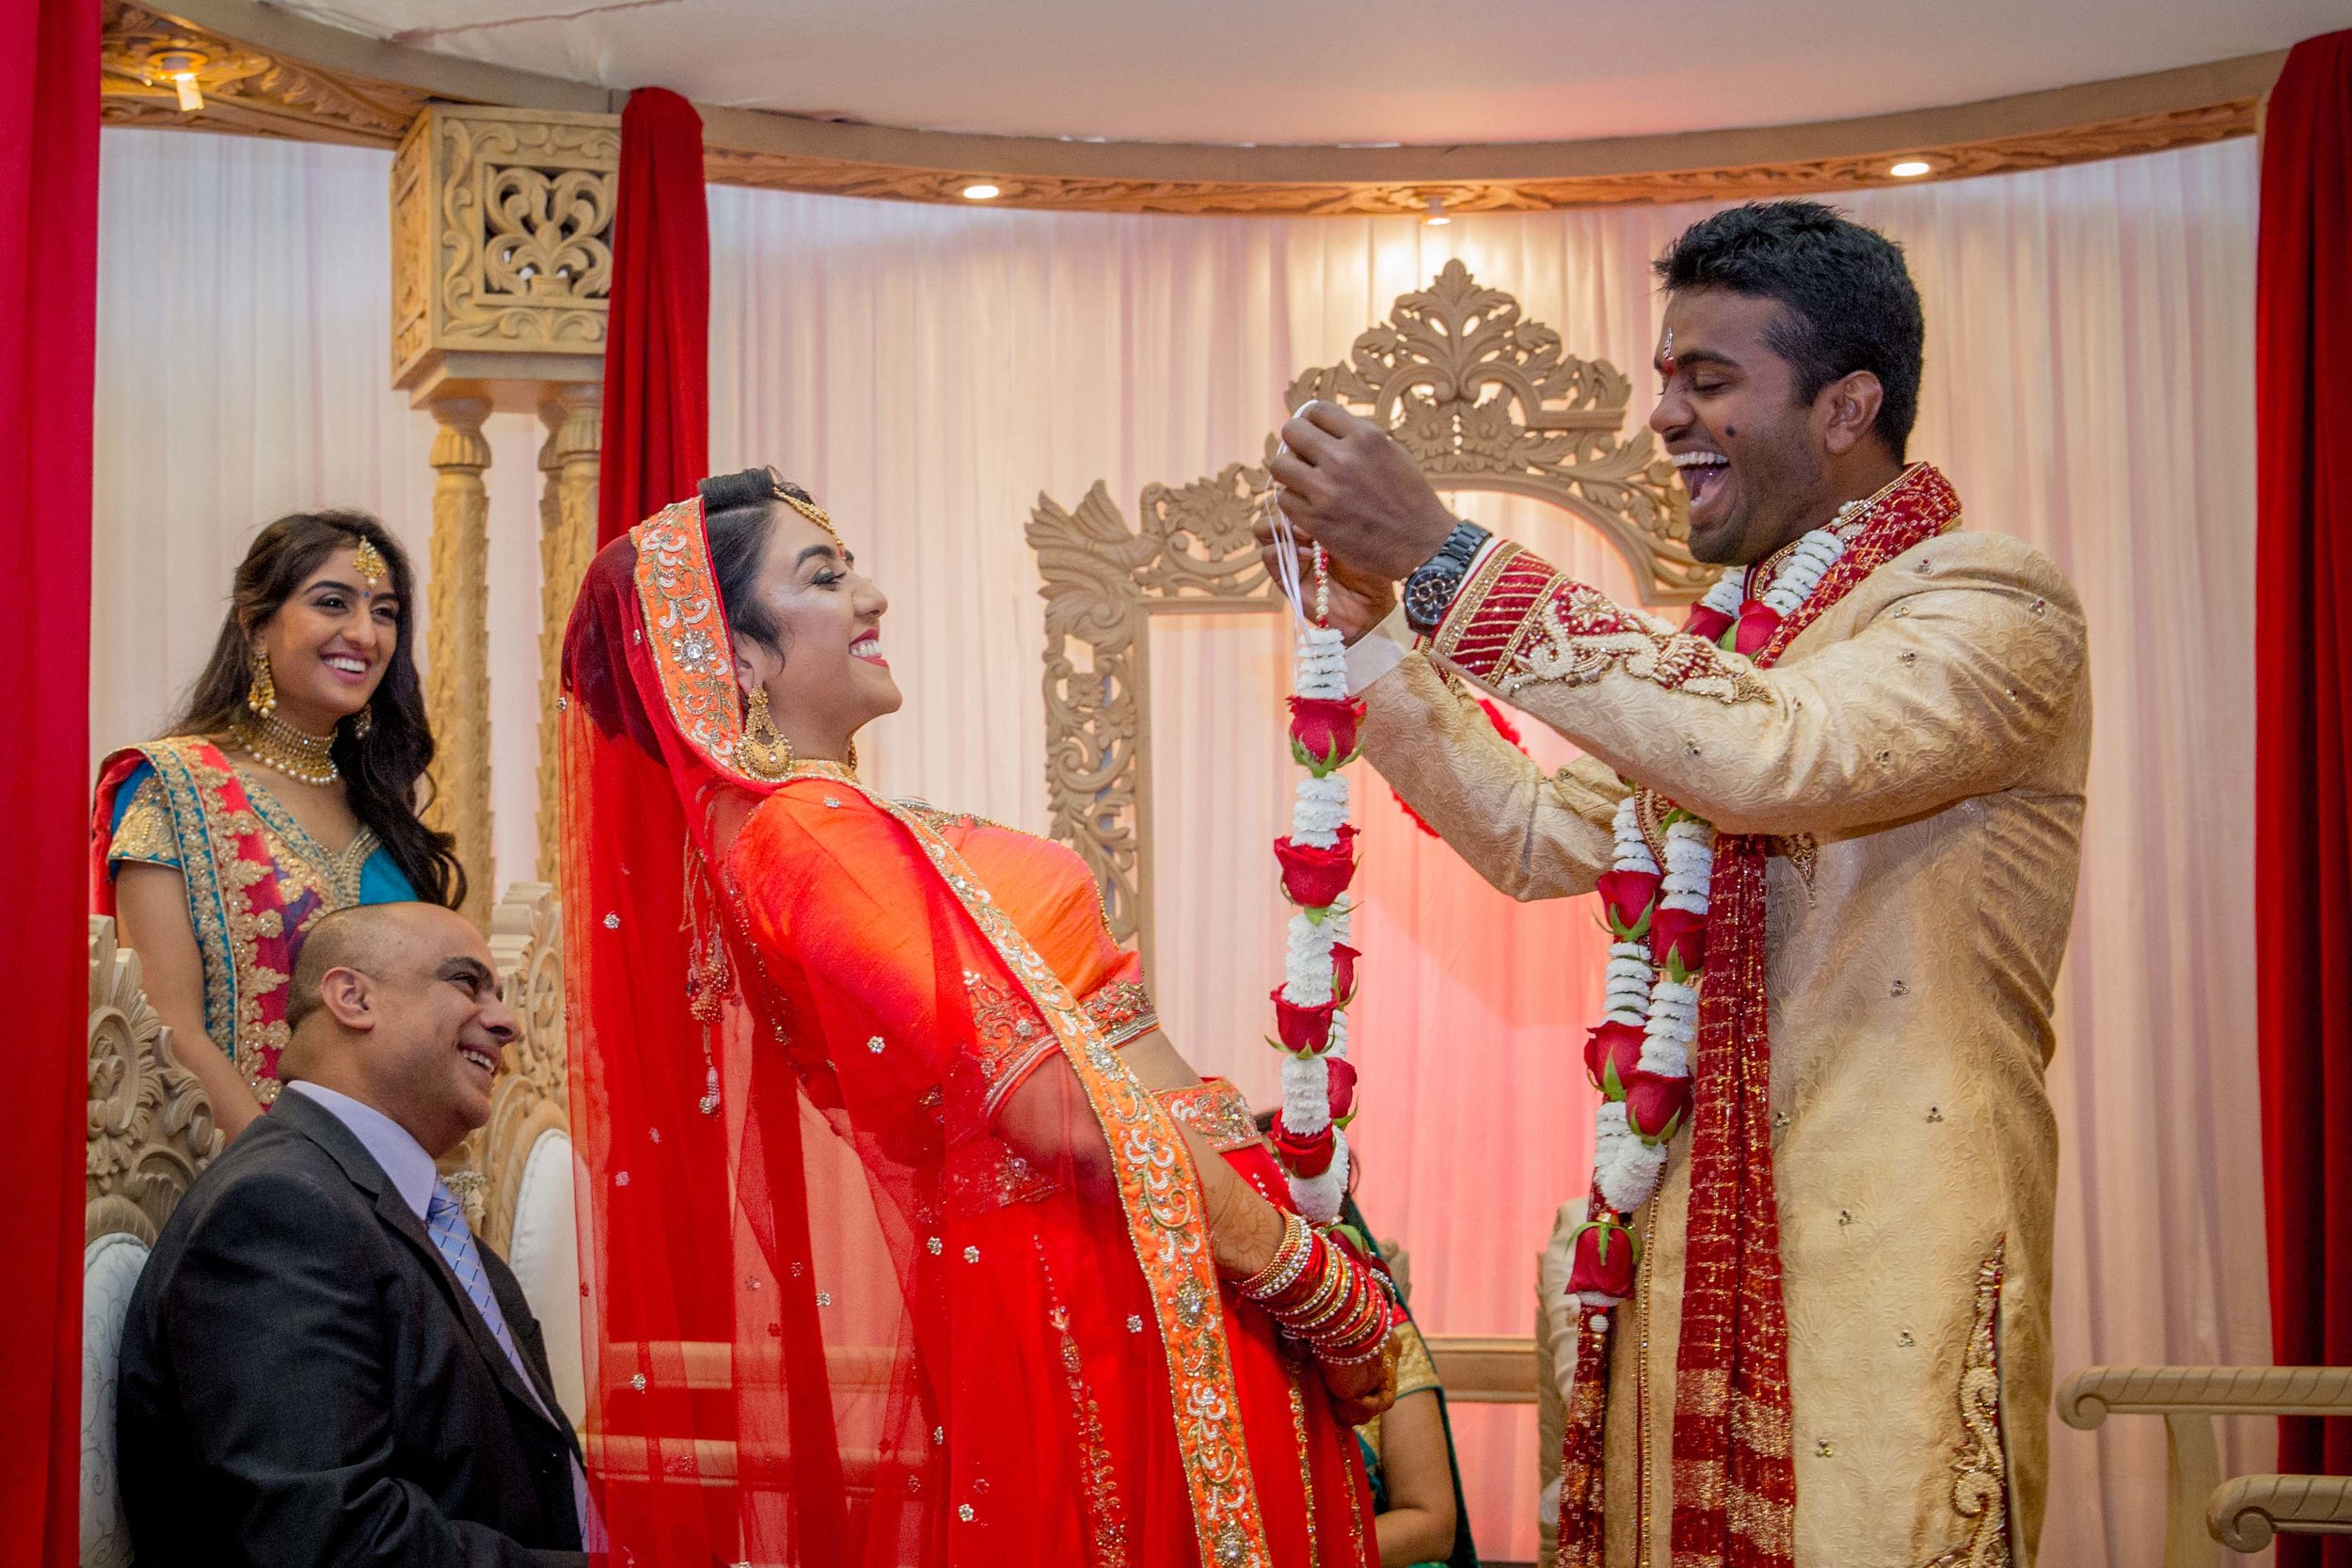 premier-banquetting-london-Hindu-asian-wedding-photographer-natalia-smith-photography-20.jpg